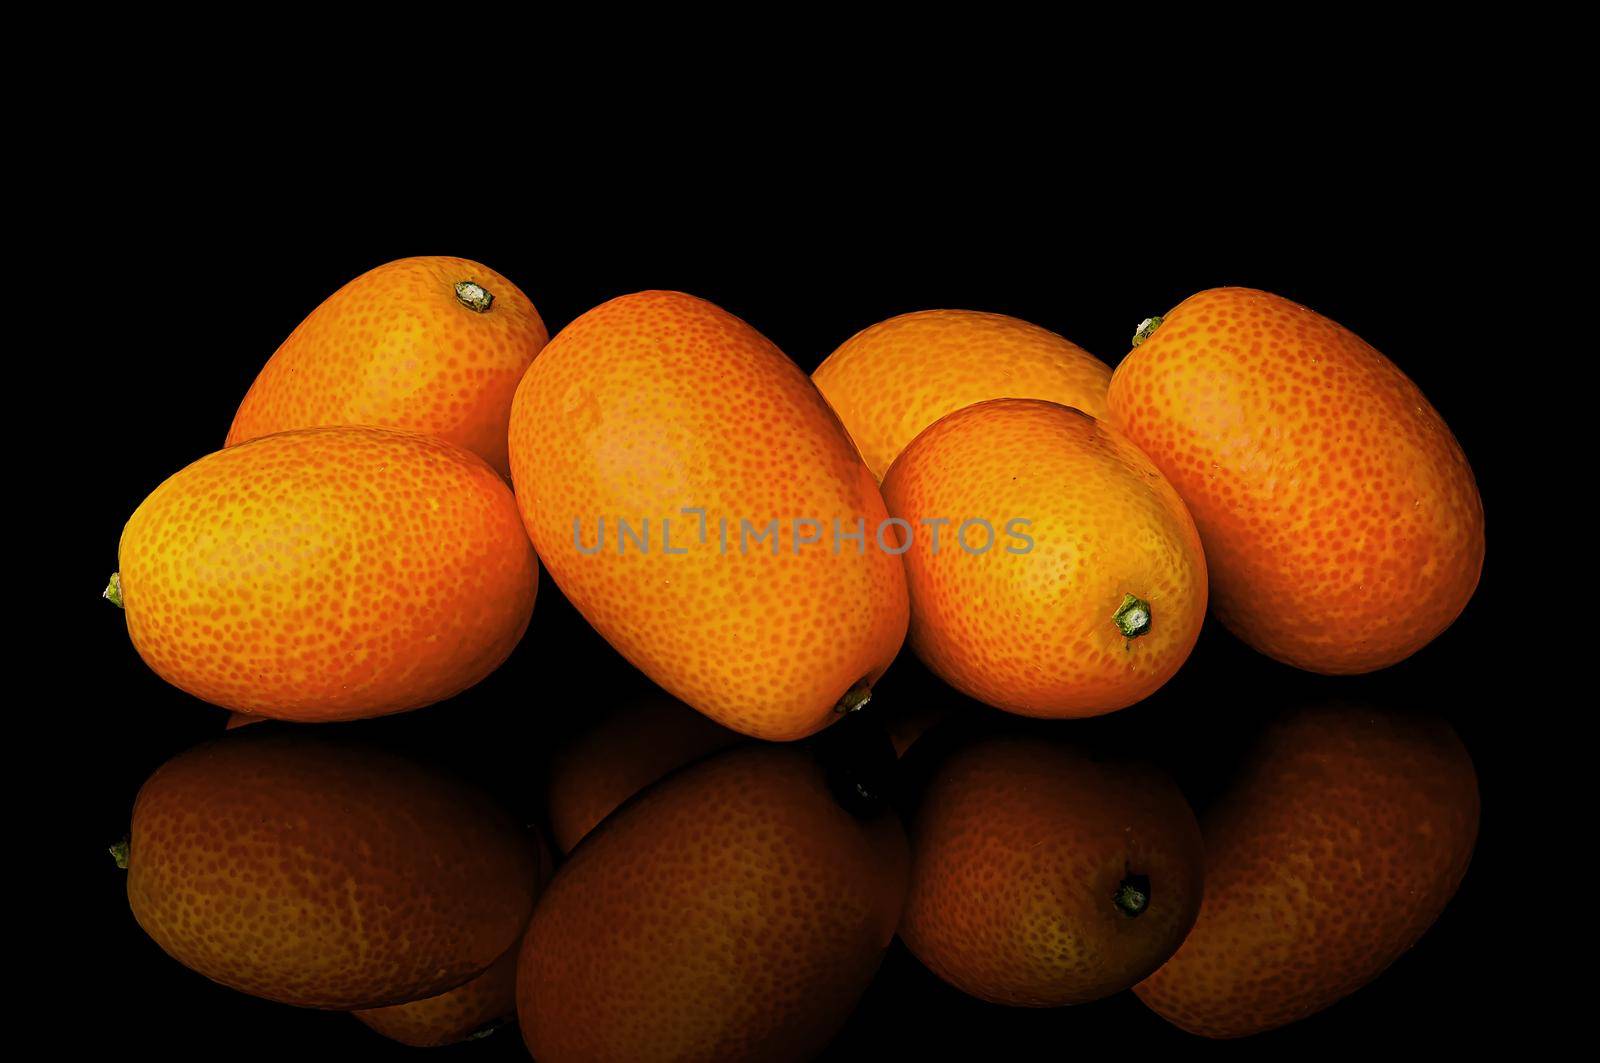 Heap of ripe kumquats on black background with reflection